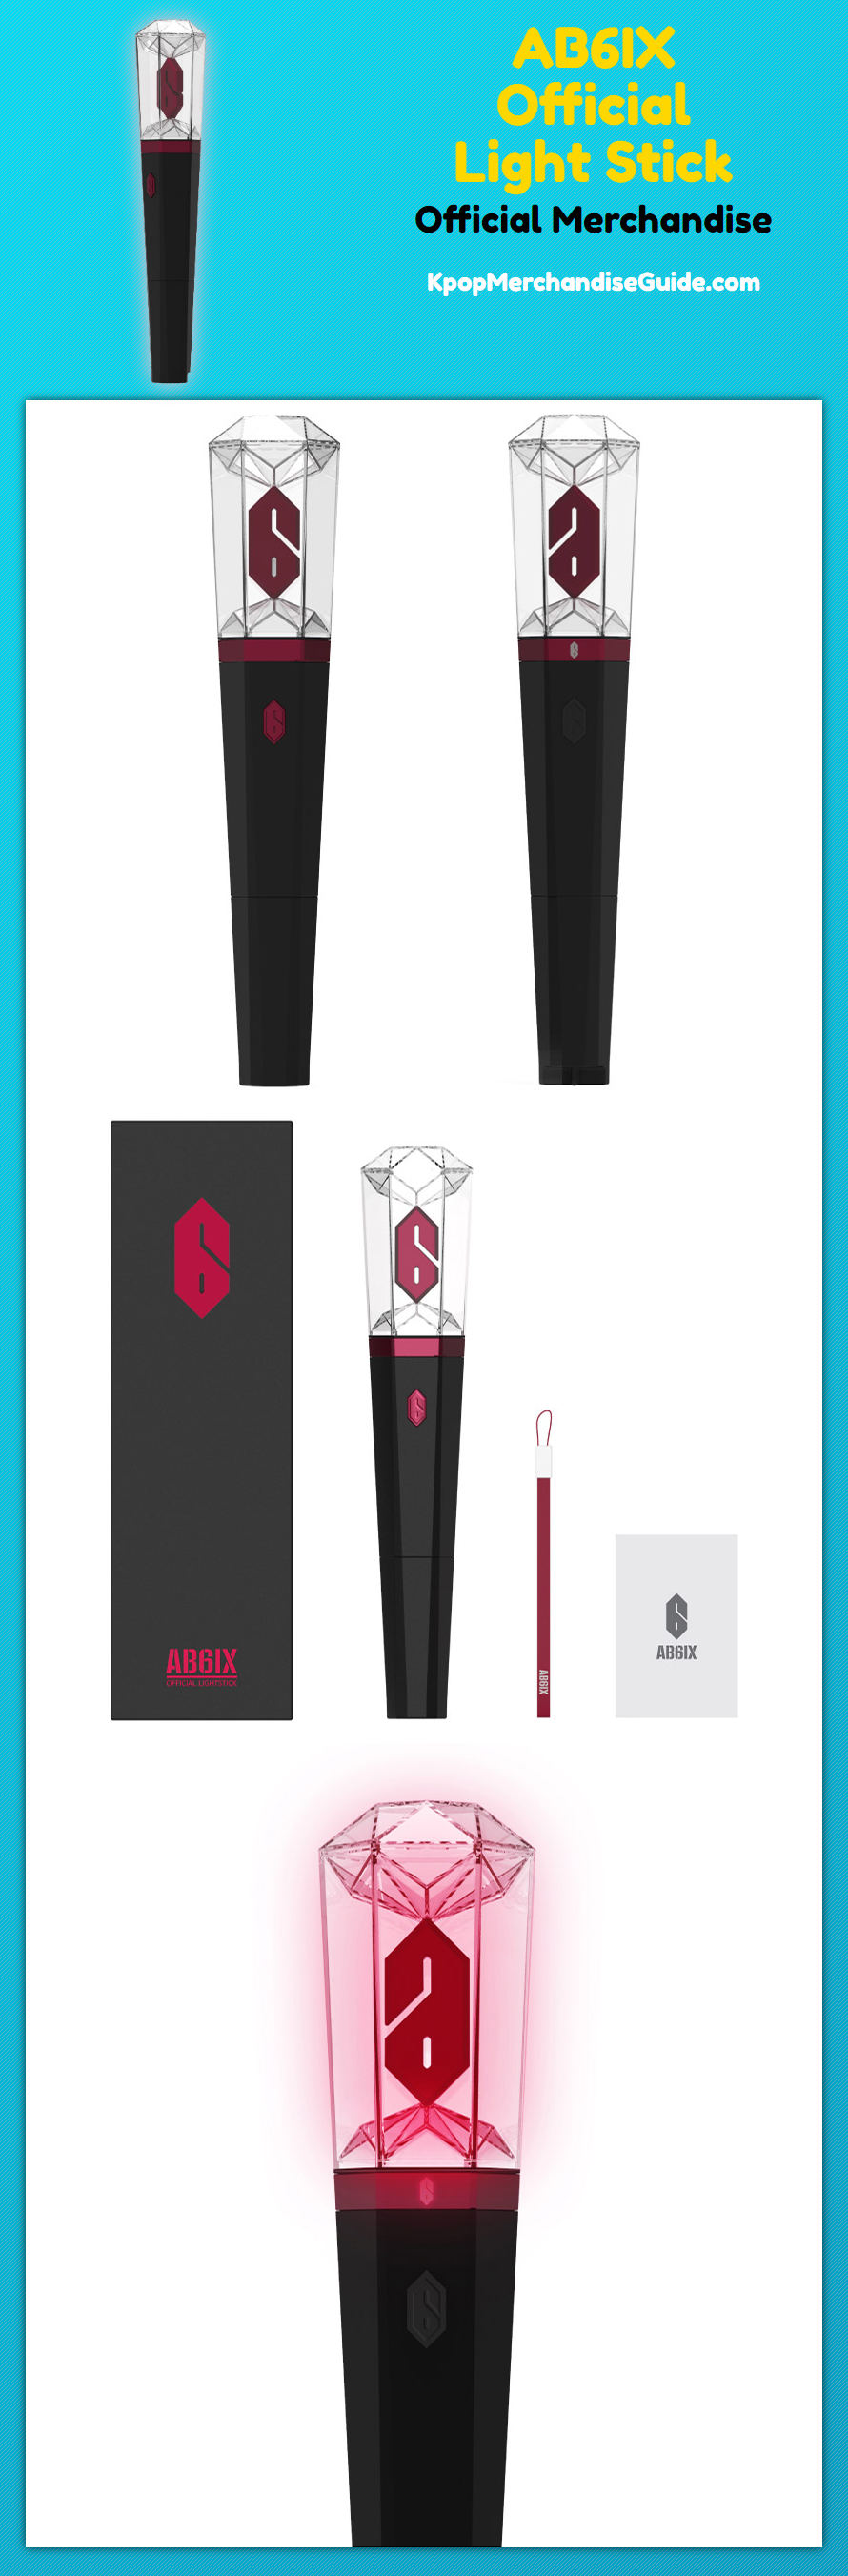 AB6IX Official Light Stick